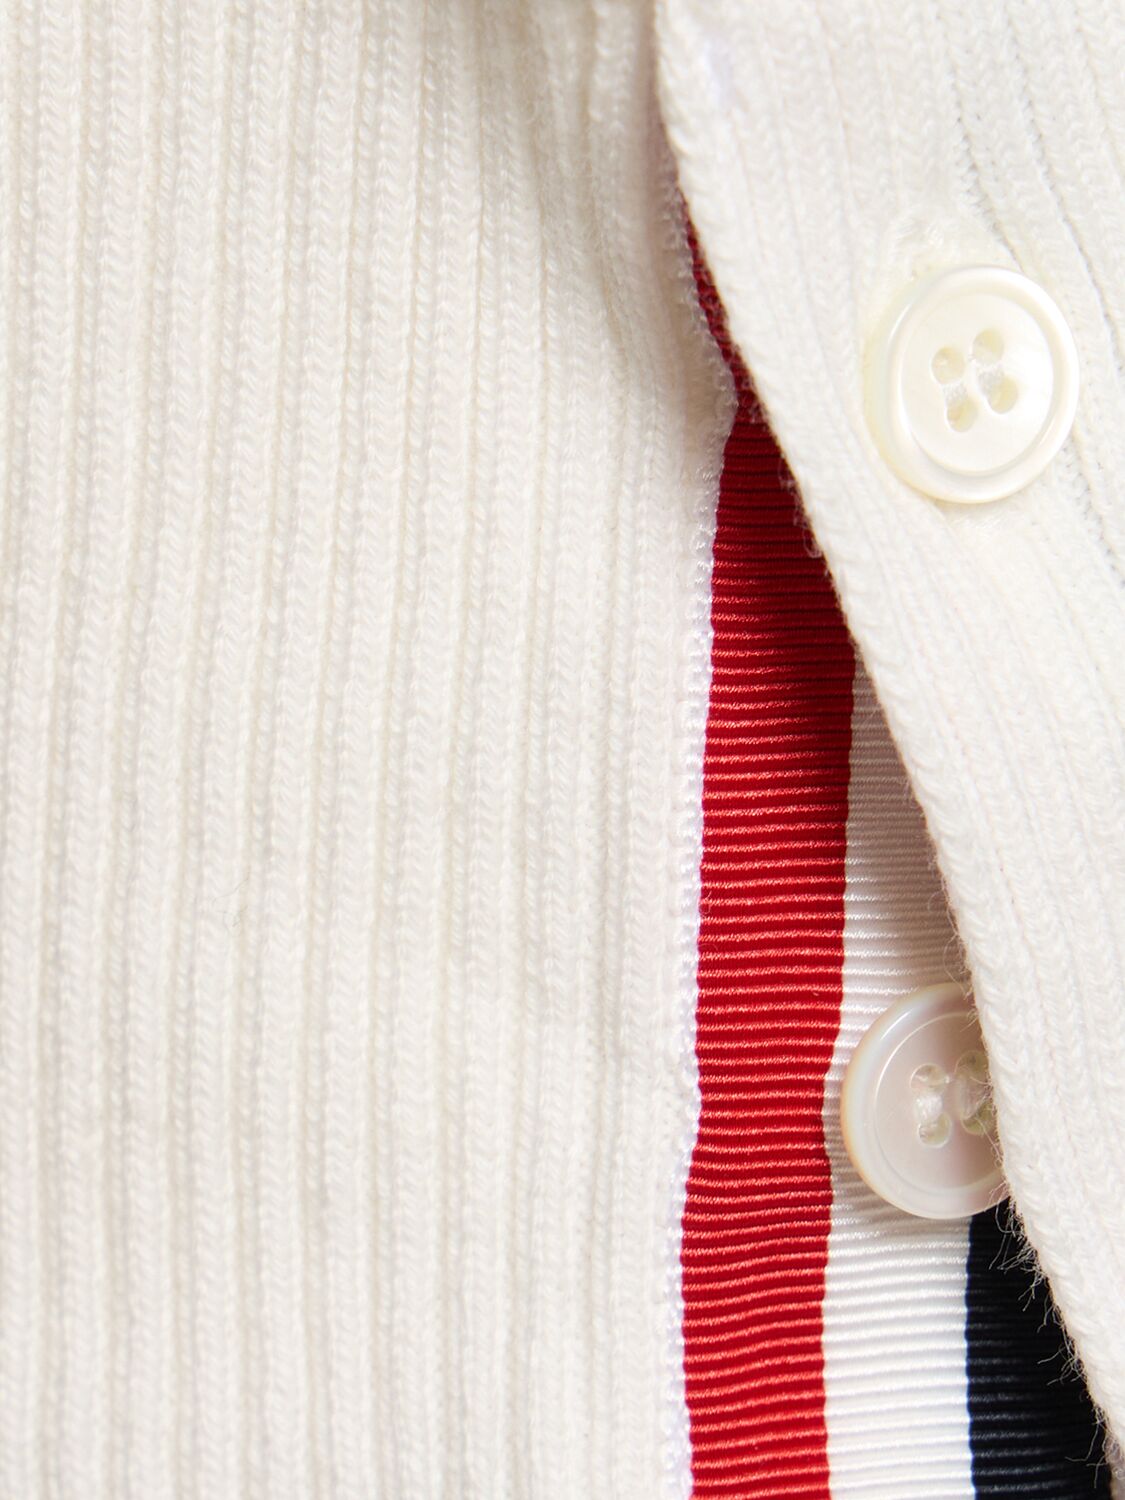 Shop Thom Browne Milano Stitch Cotton Crewneck Sweater In White